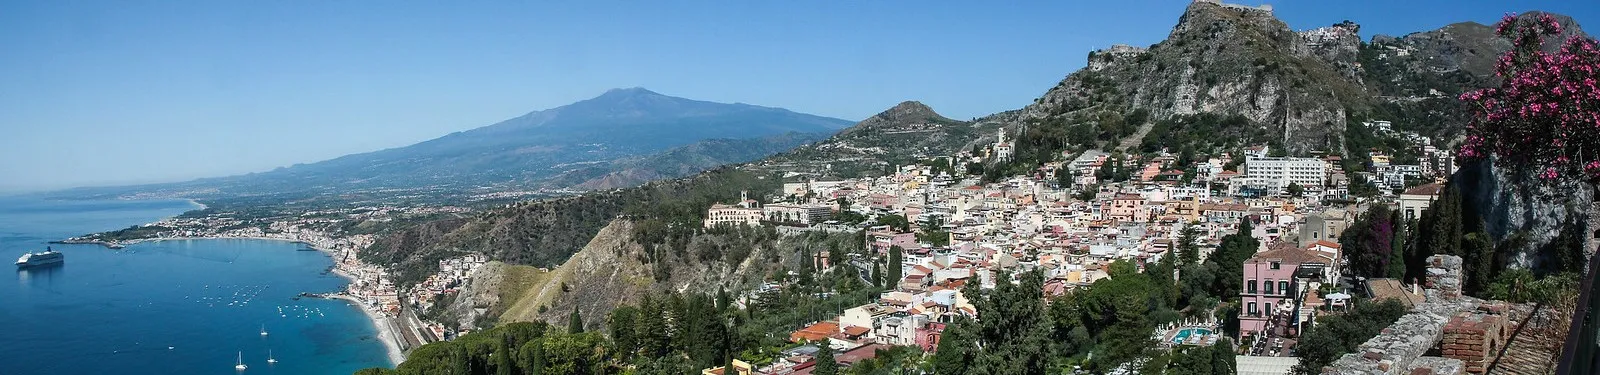 Sicily Banner Image